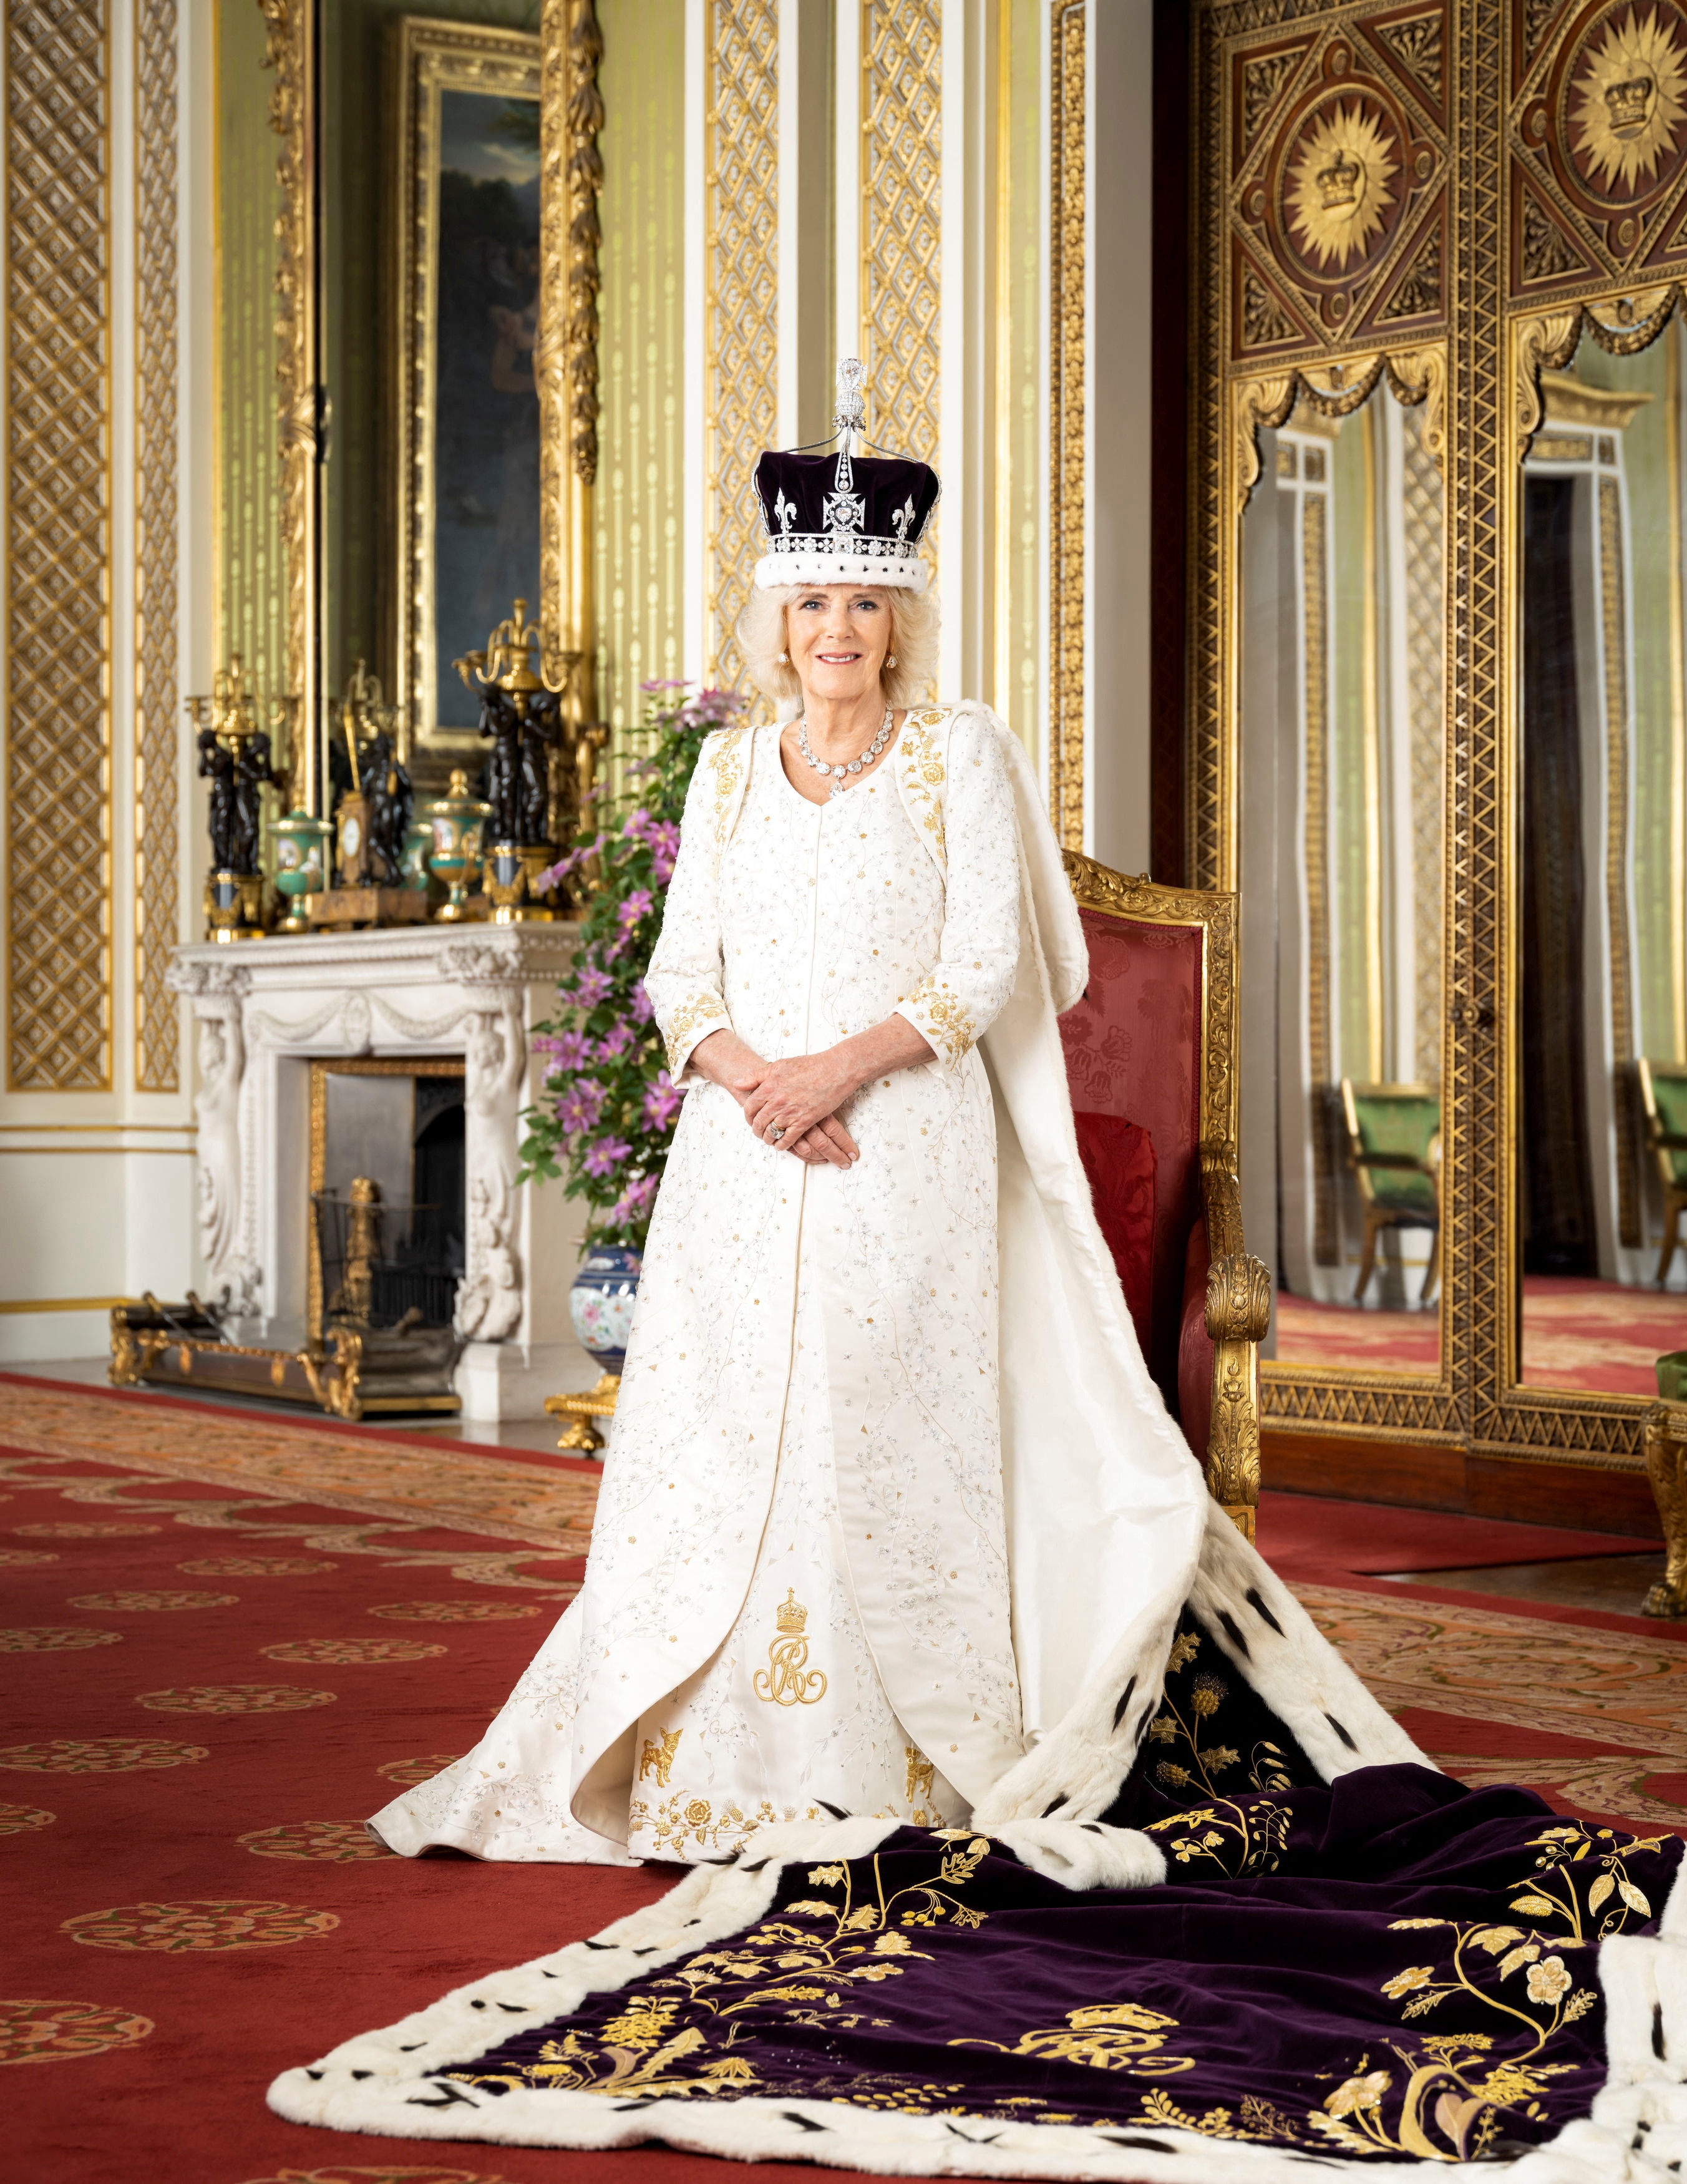 Camilla smiles in her crown and regalia.